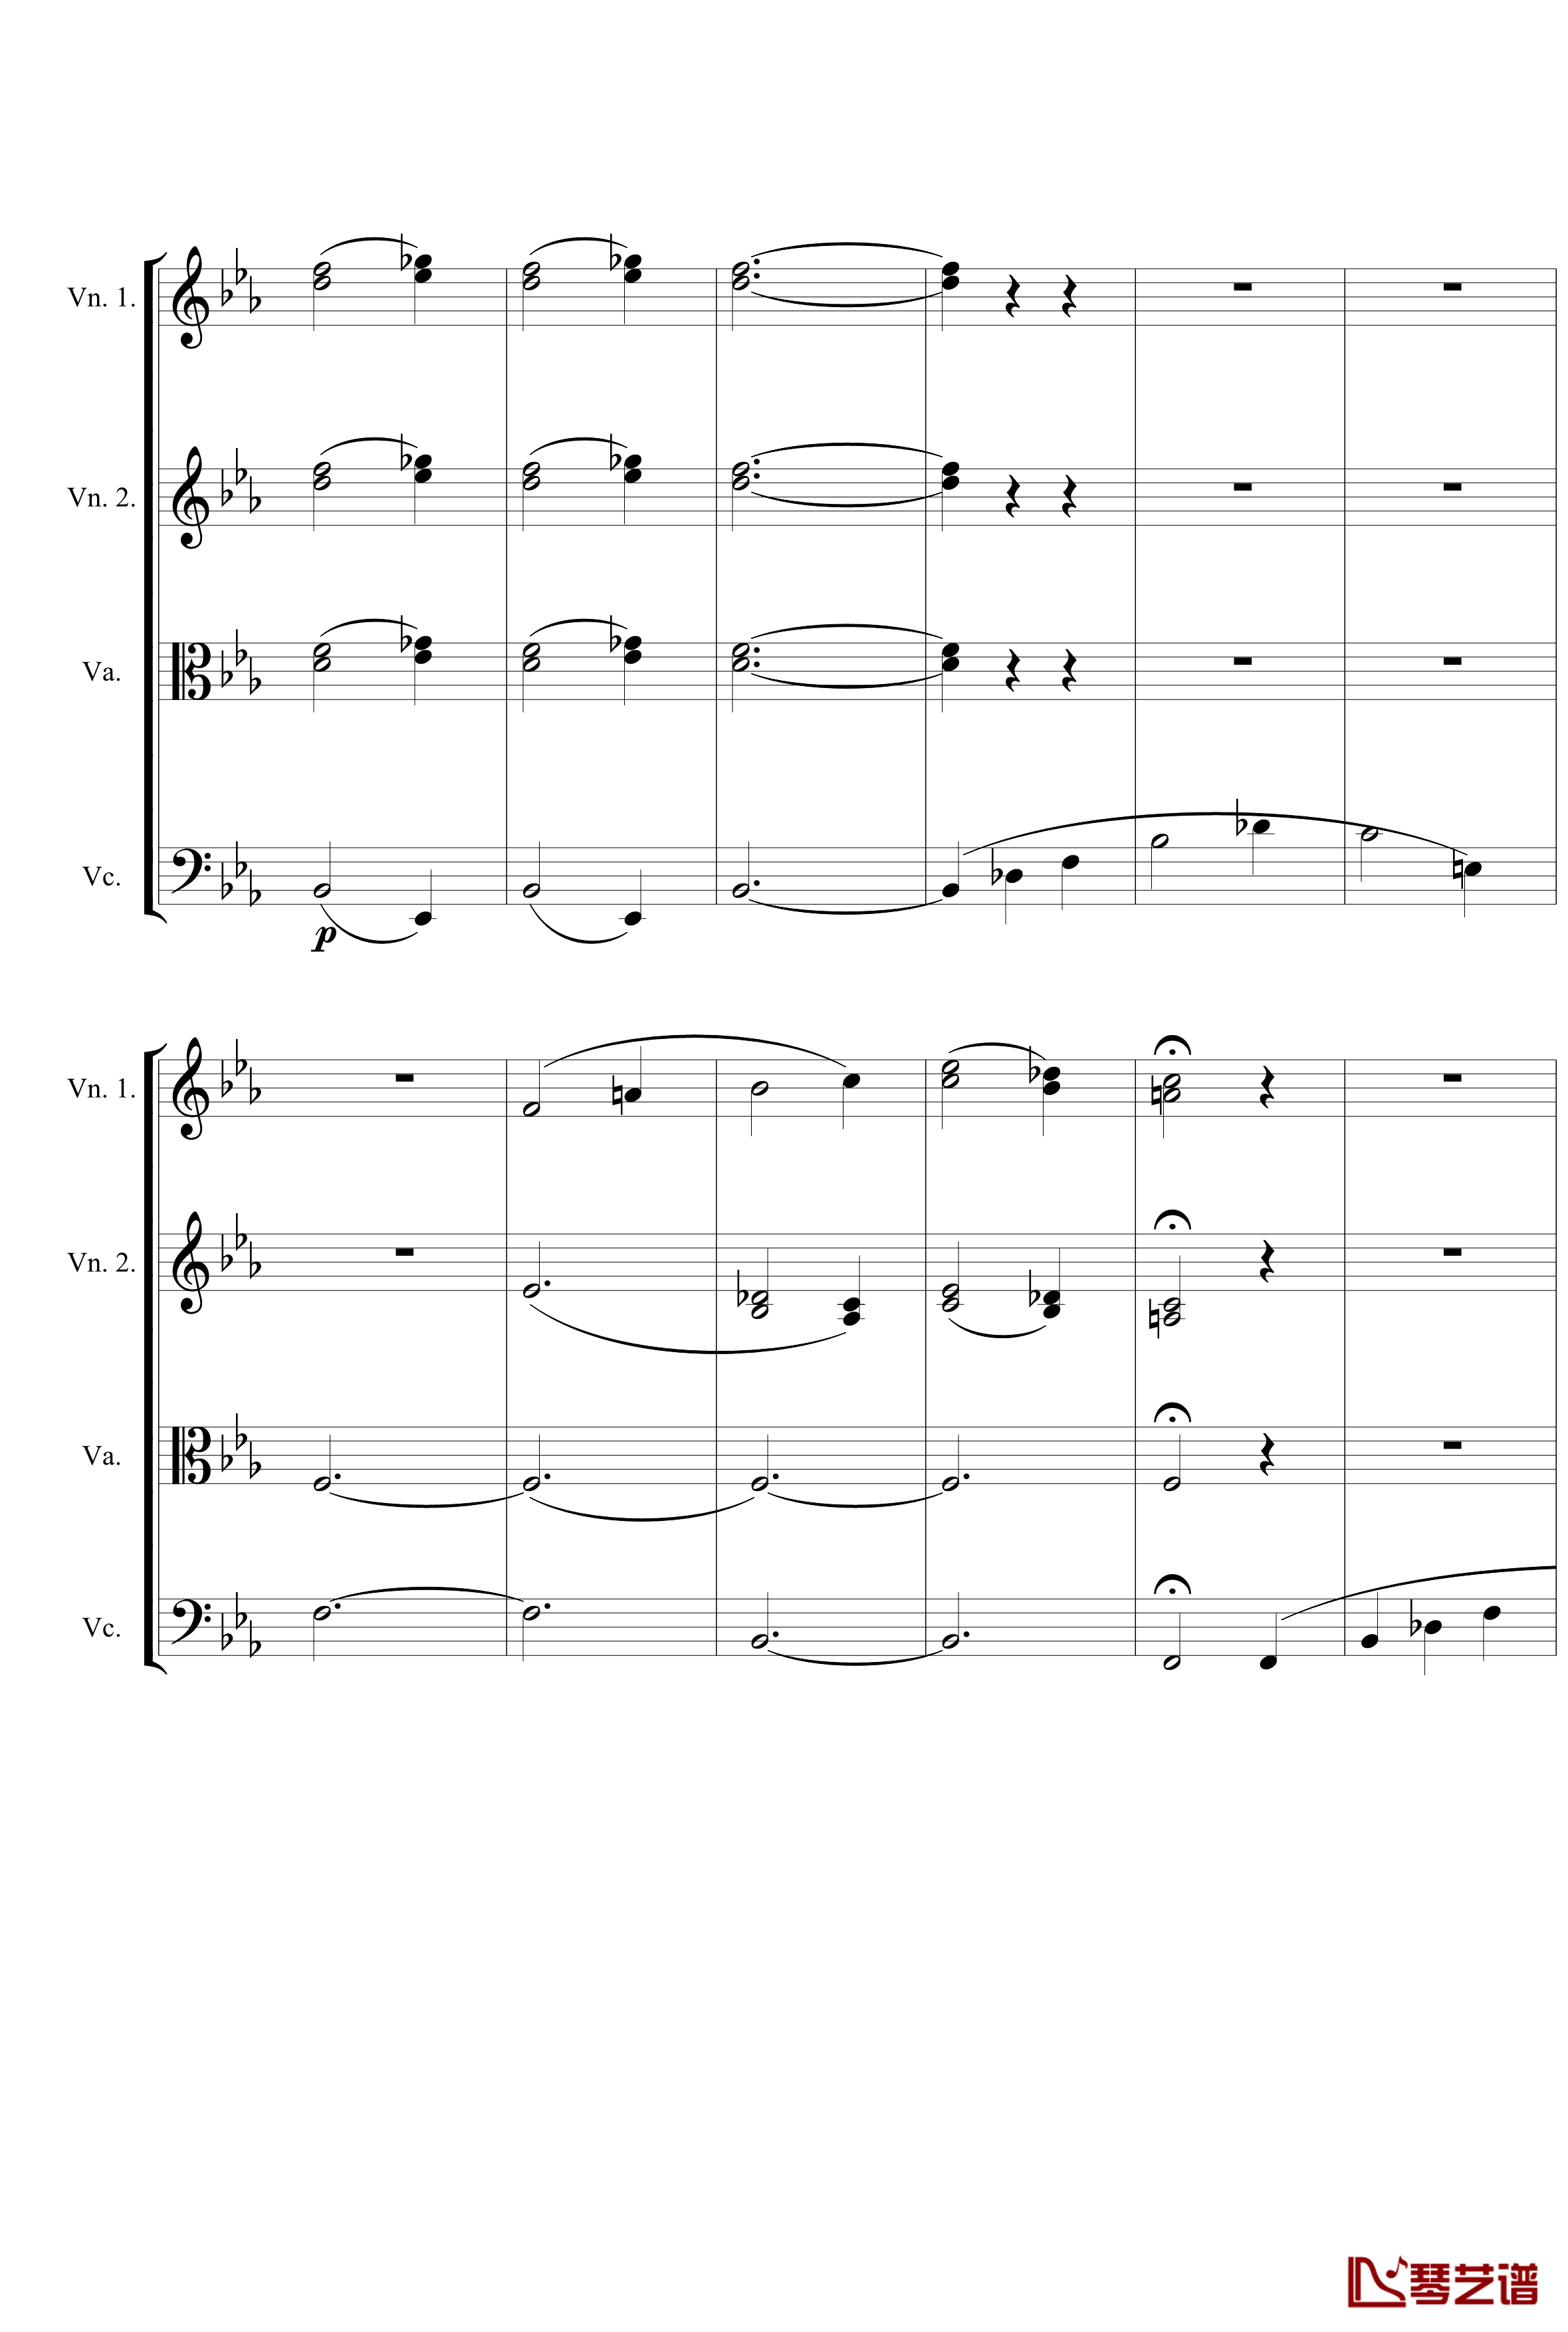 Symphony No.5 in C Minor 3rd钢琴谱-String quartet-贝多芬-beethoven4